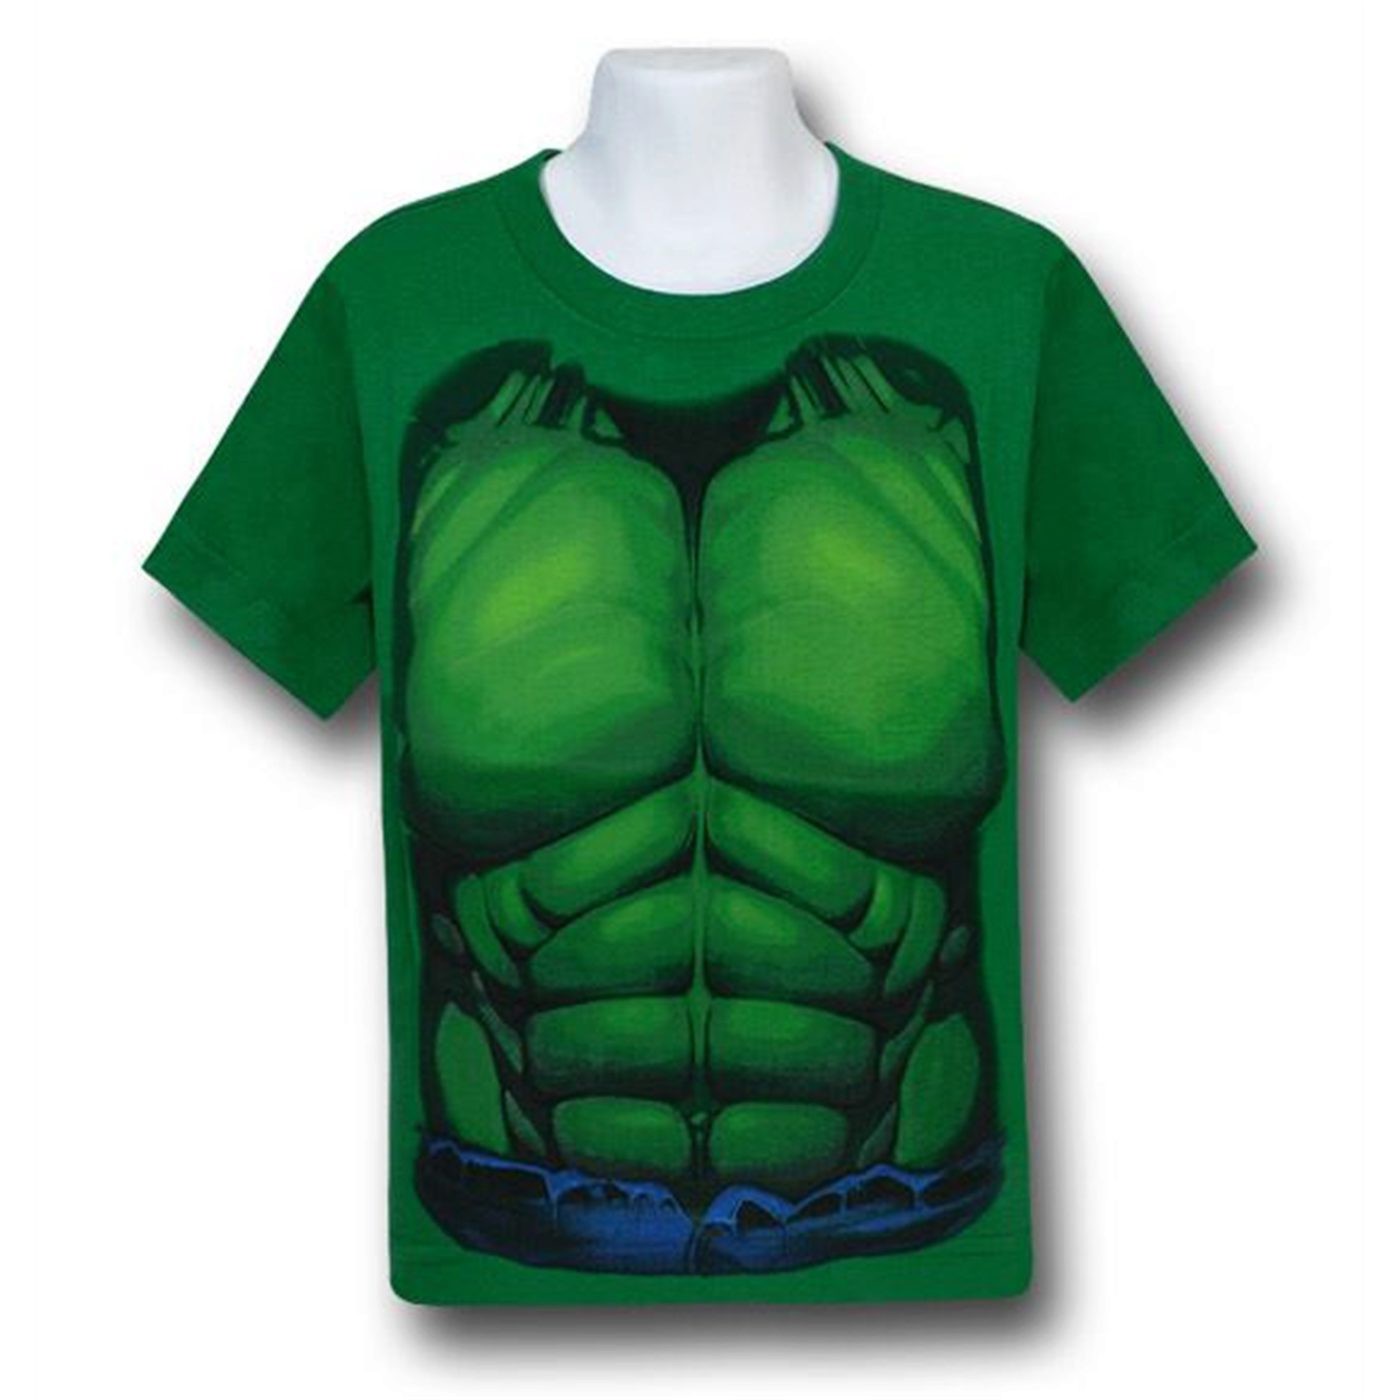 Sizes 1-15 Yrs 6 Colours Lego Marvel 'Hulk' Childs T-Shirt 